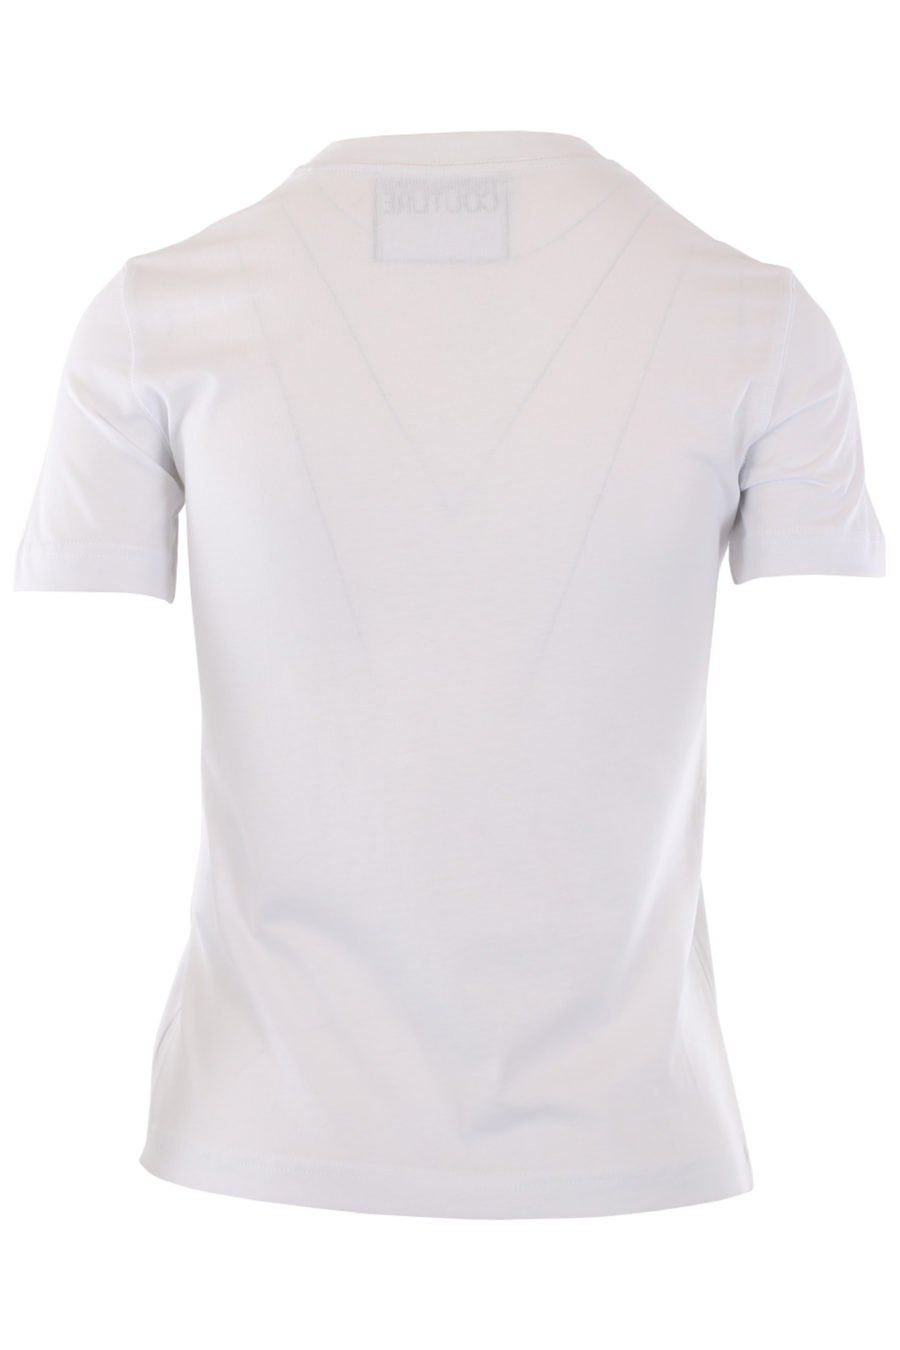 Camiseta blanca con logo multicolor centro - IMG 0794